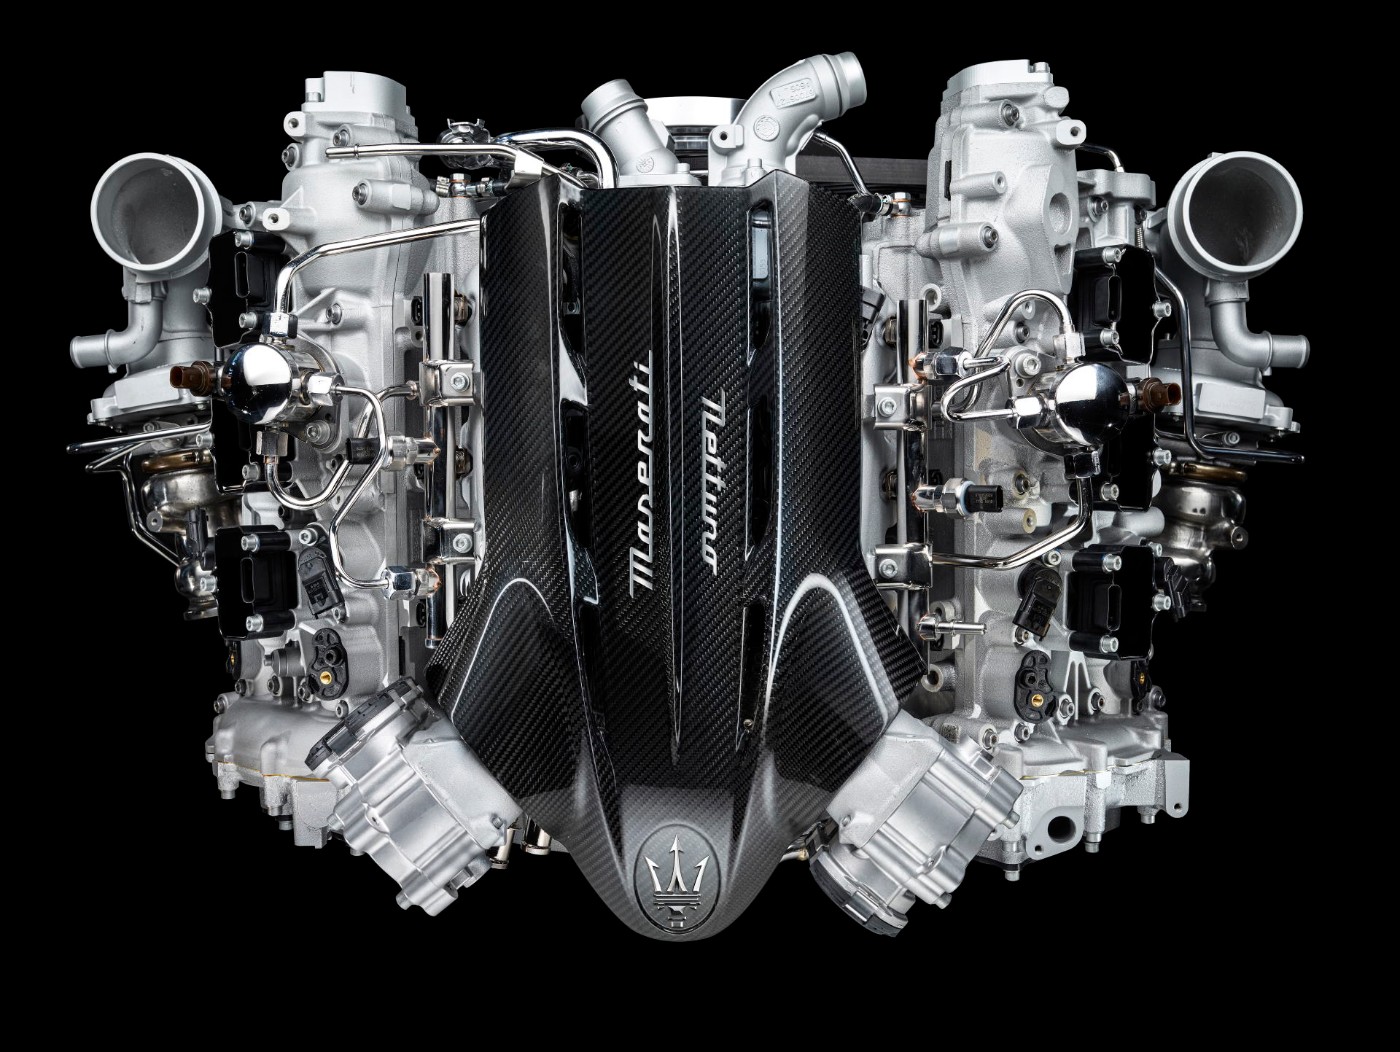 Maserati motor Nettuno V6 de MC20